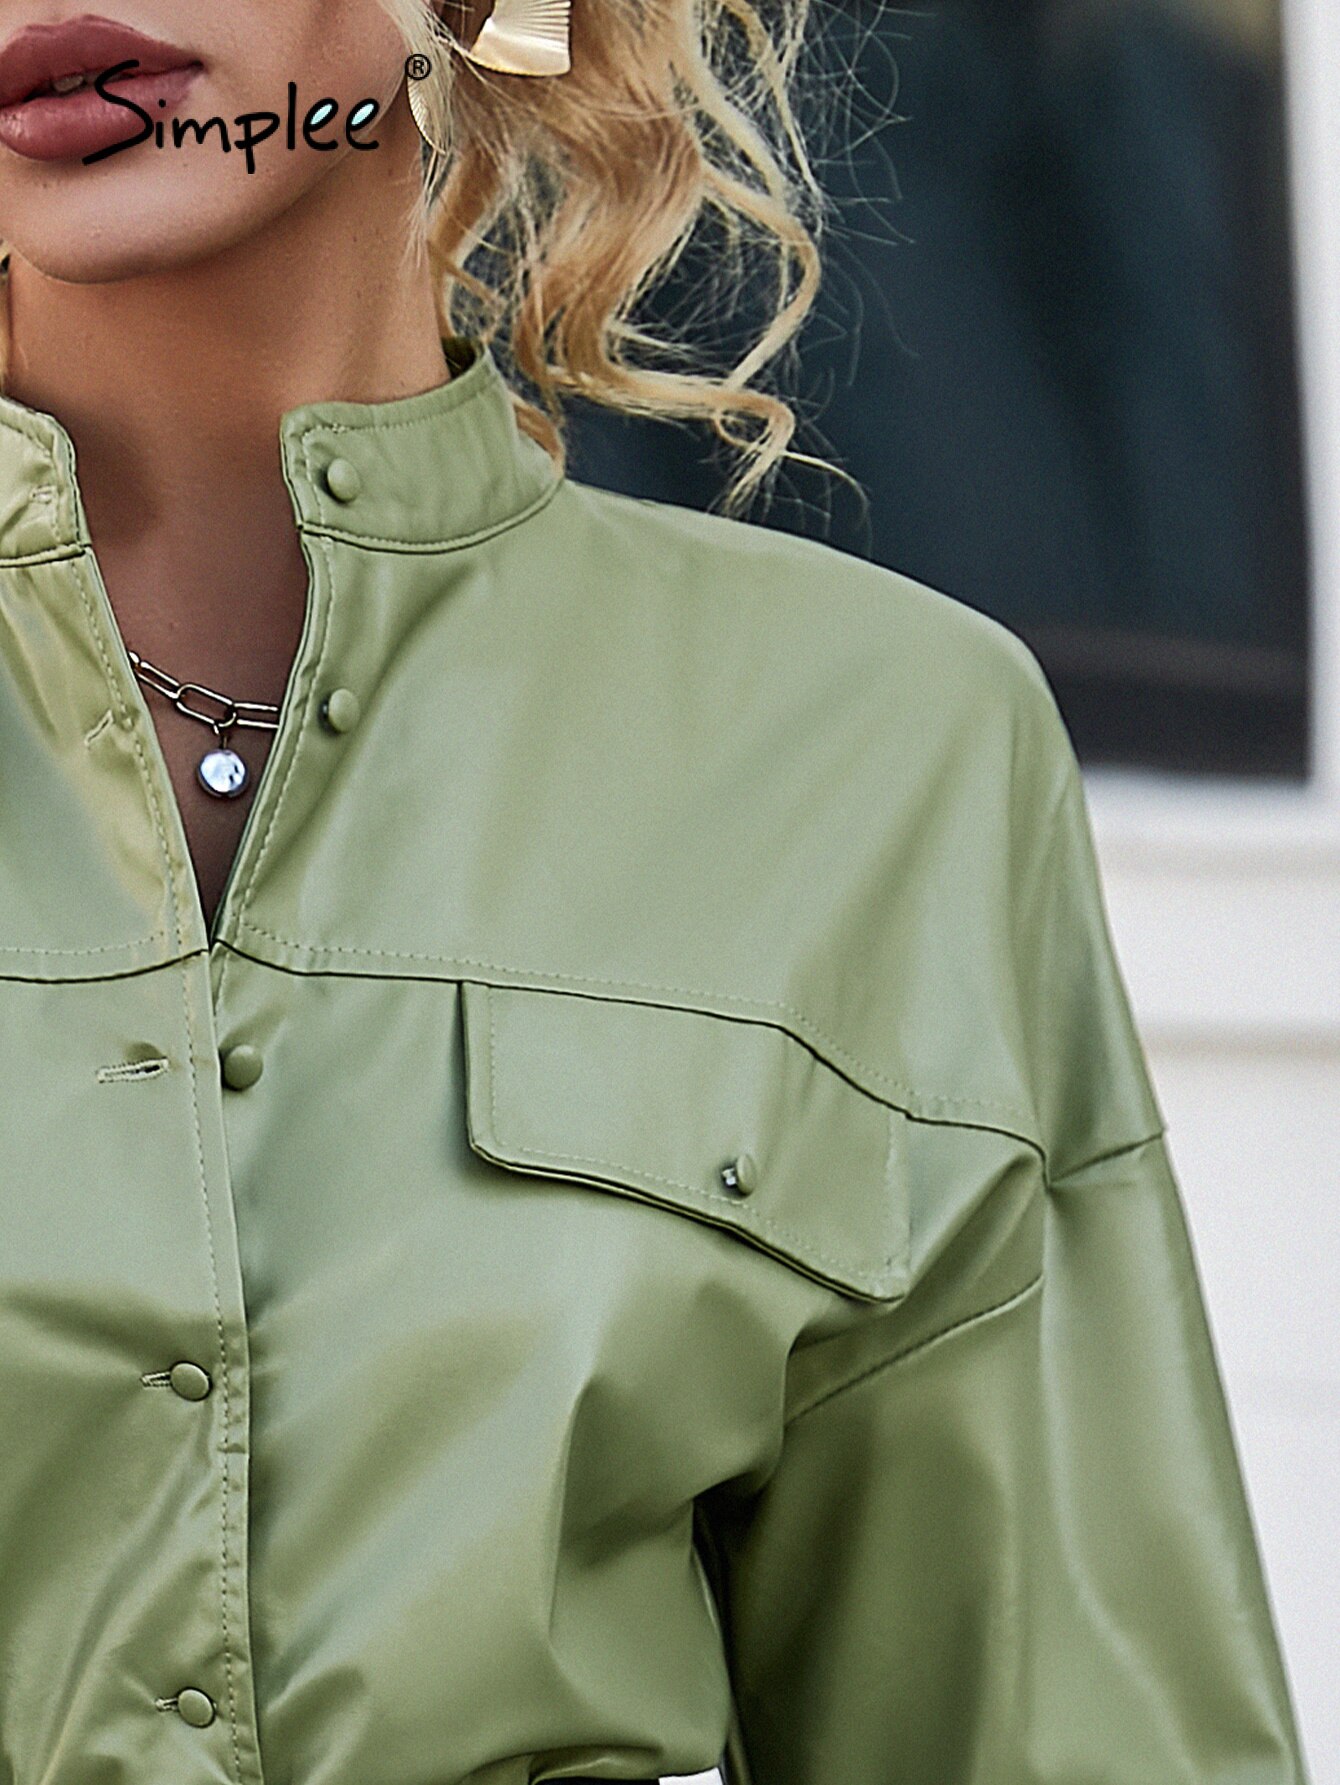 Simplee-Office-button-pocket-A-line-women-dress-green-High-street-pu-leather-bat-sleeve-mini-5